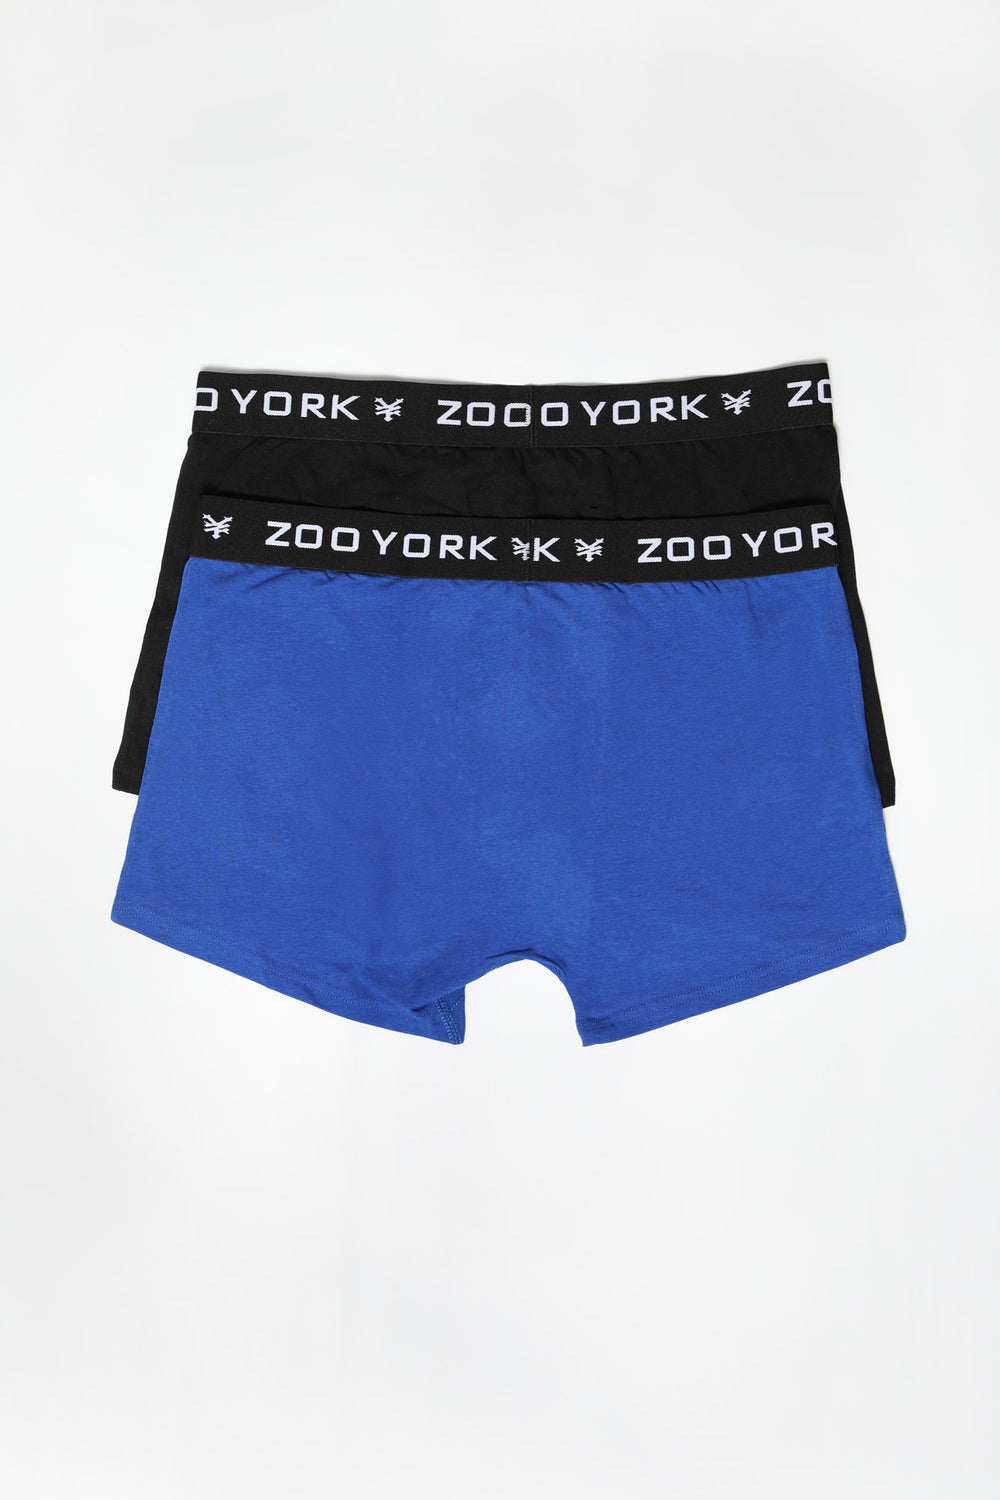 Zoo York Mens 2-Pack Boxer Briefs Blue